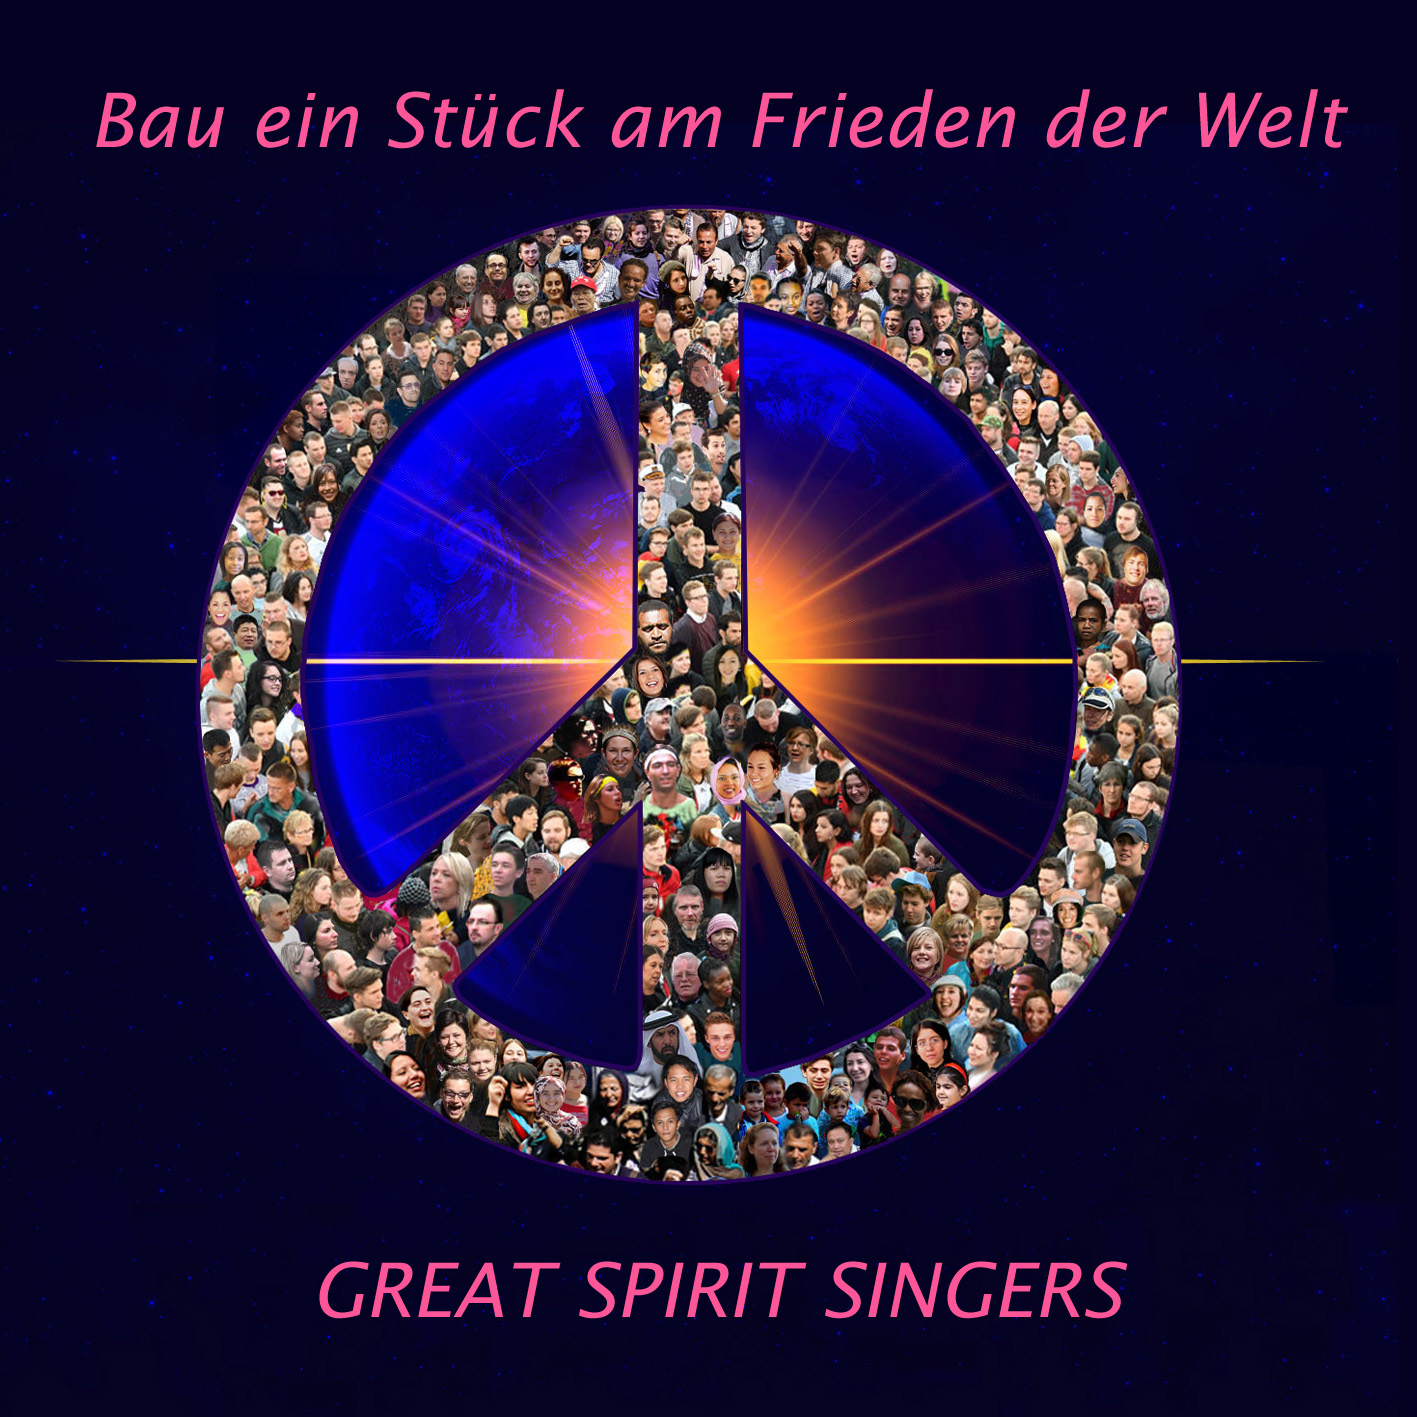 Great Spirit Singers